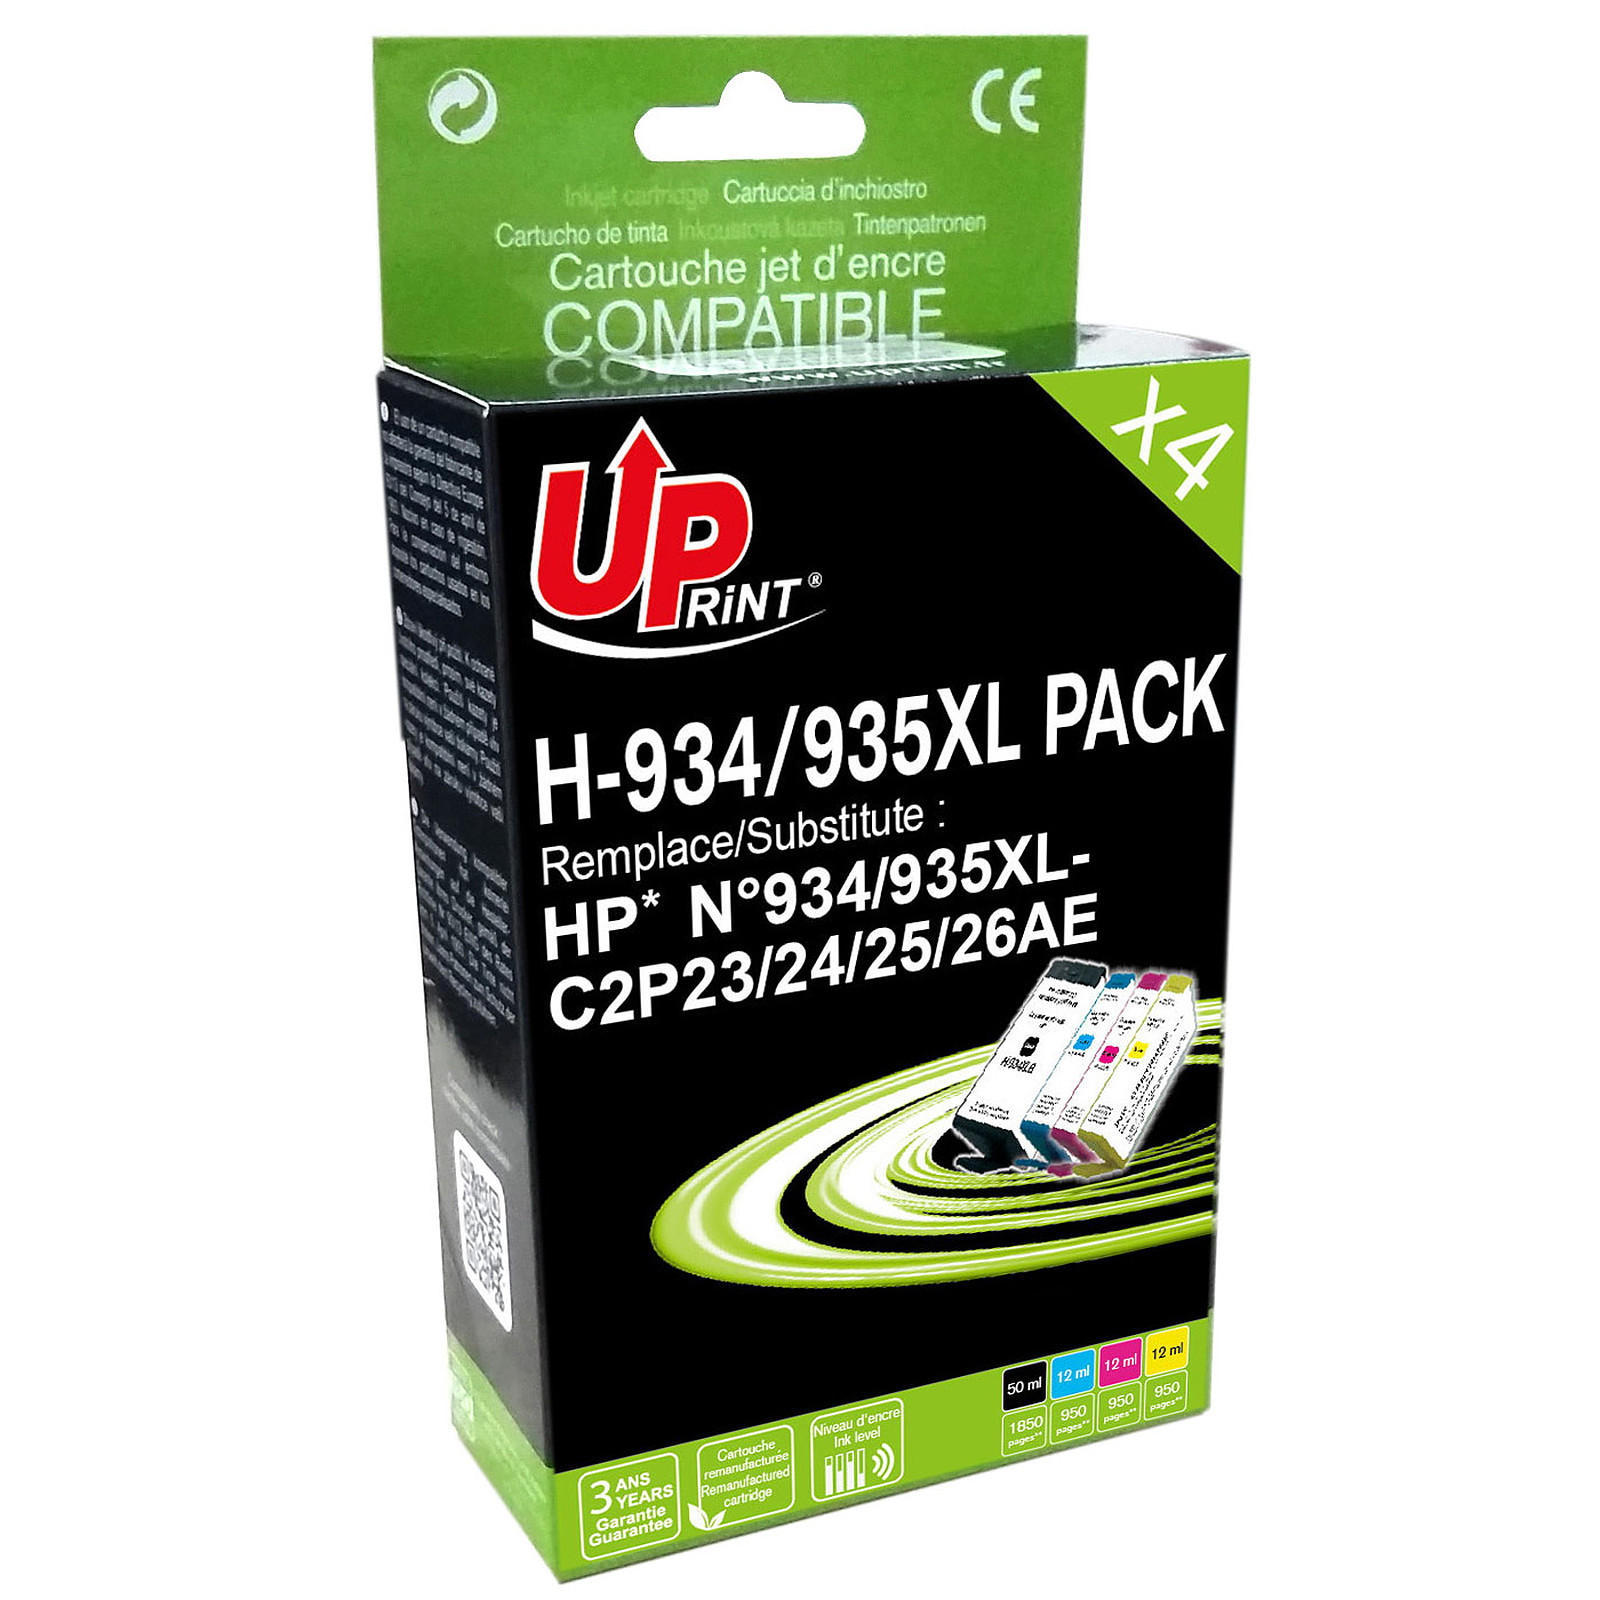 UPrint H-934/935XL Pack - Cartouche imprimante UPrint